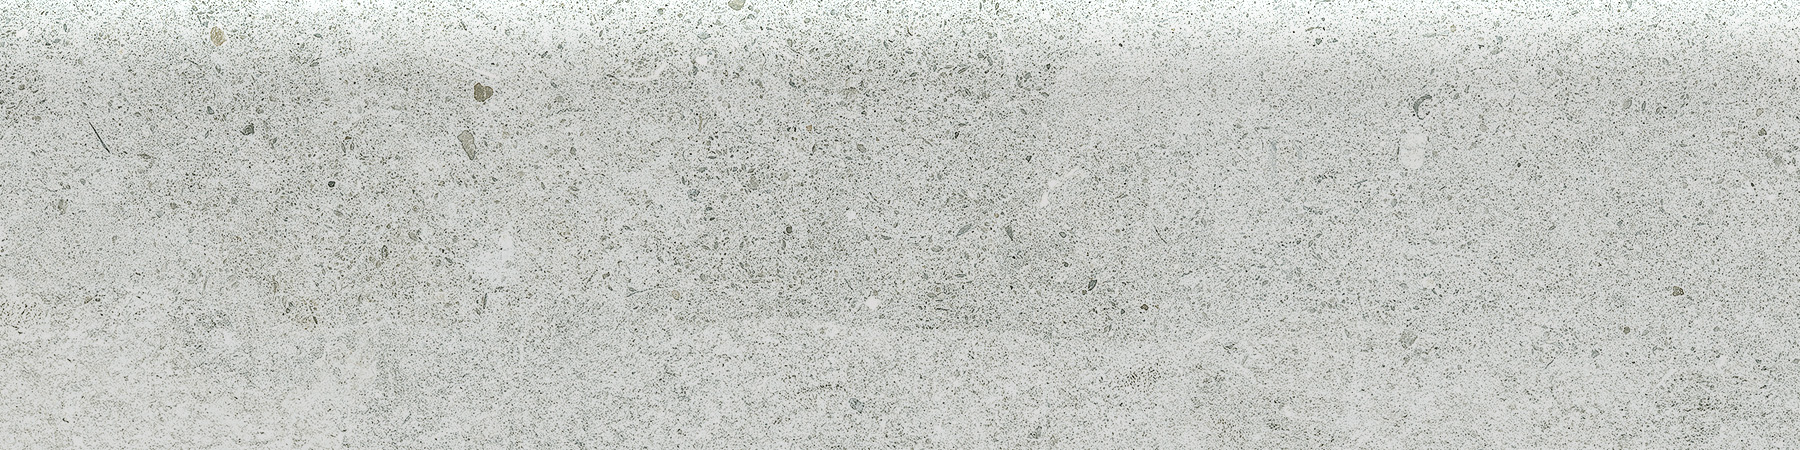 grigio pattern glazed porcelain bullnose molding from veneta anatolia collection distributed by surface group international matte finish straight edge edge 3x12 bar shape